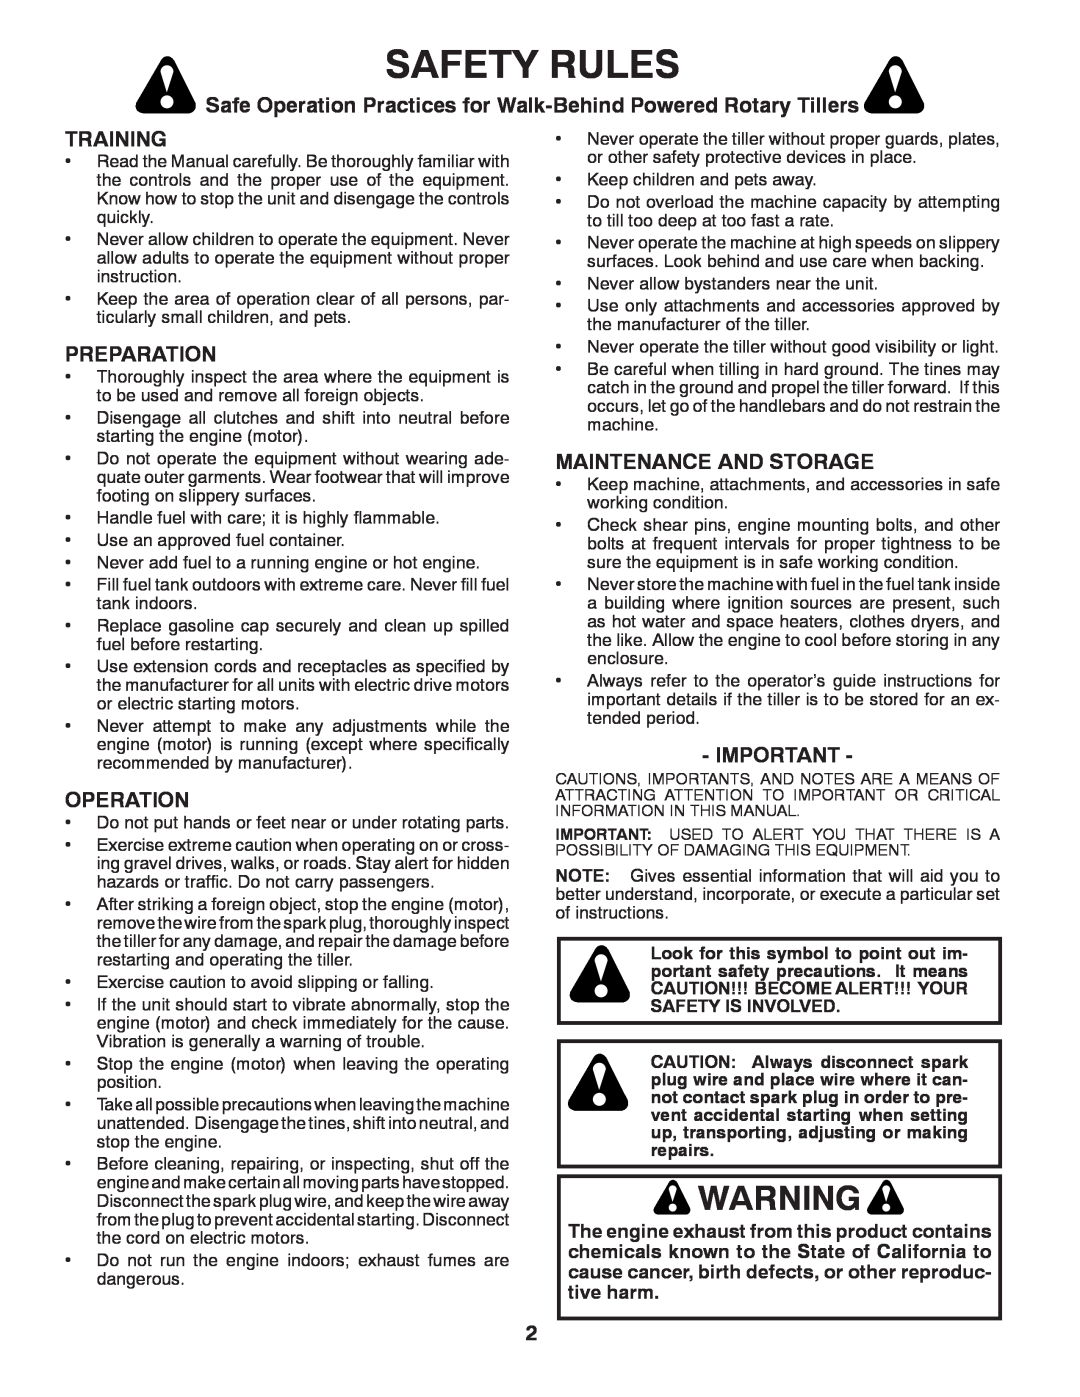 Poulan PRRT875X manual Safety Rules, Training, Preparation, Operation, Maintenance And Storage 